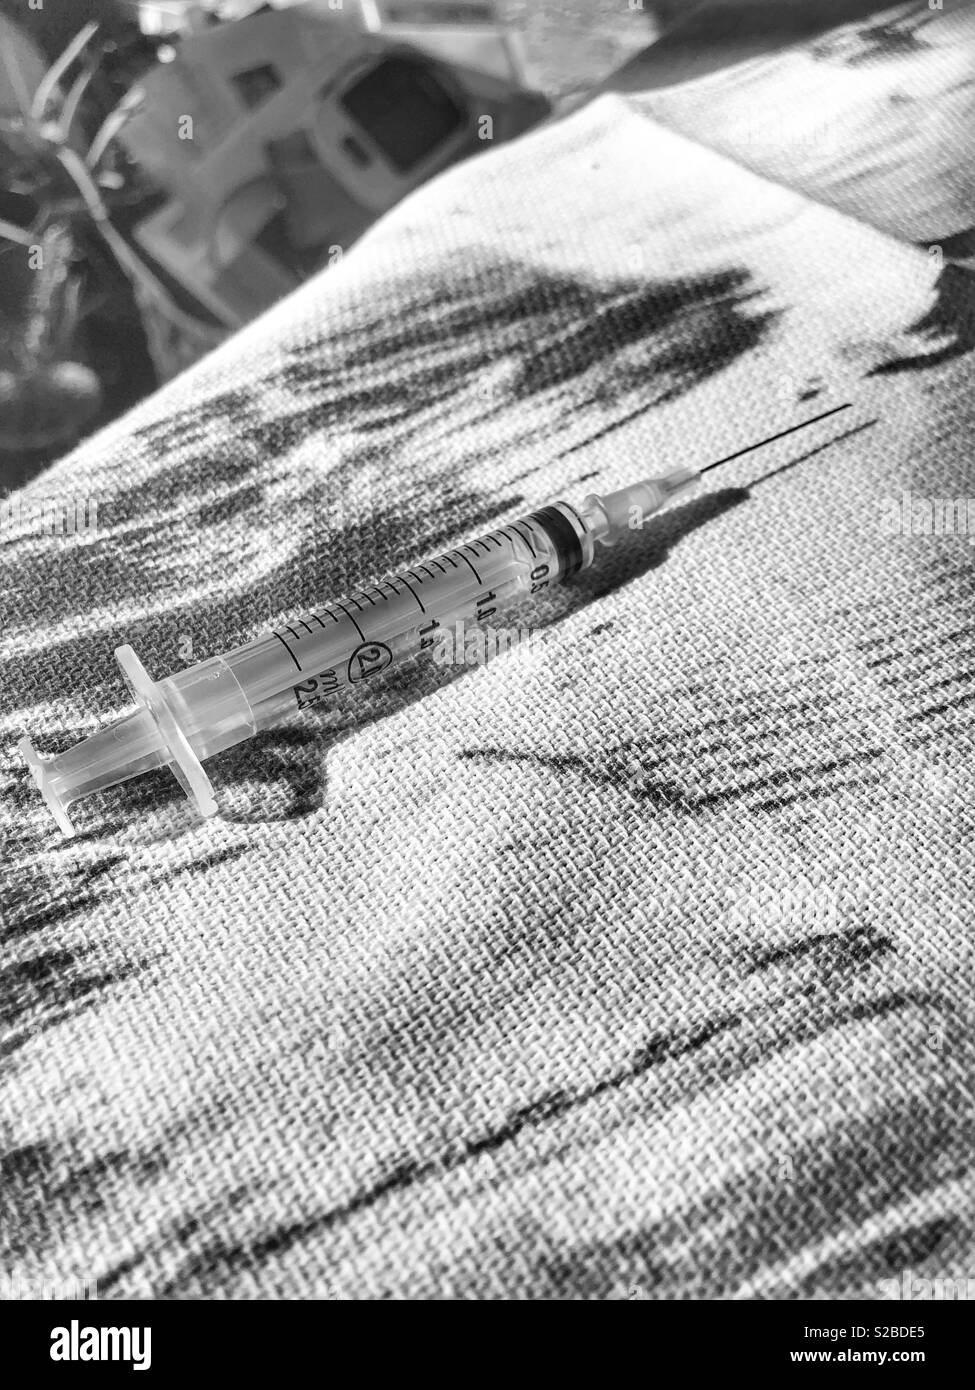 2.5ml syringe in black and white Stock Photo